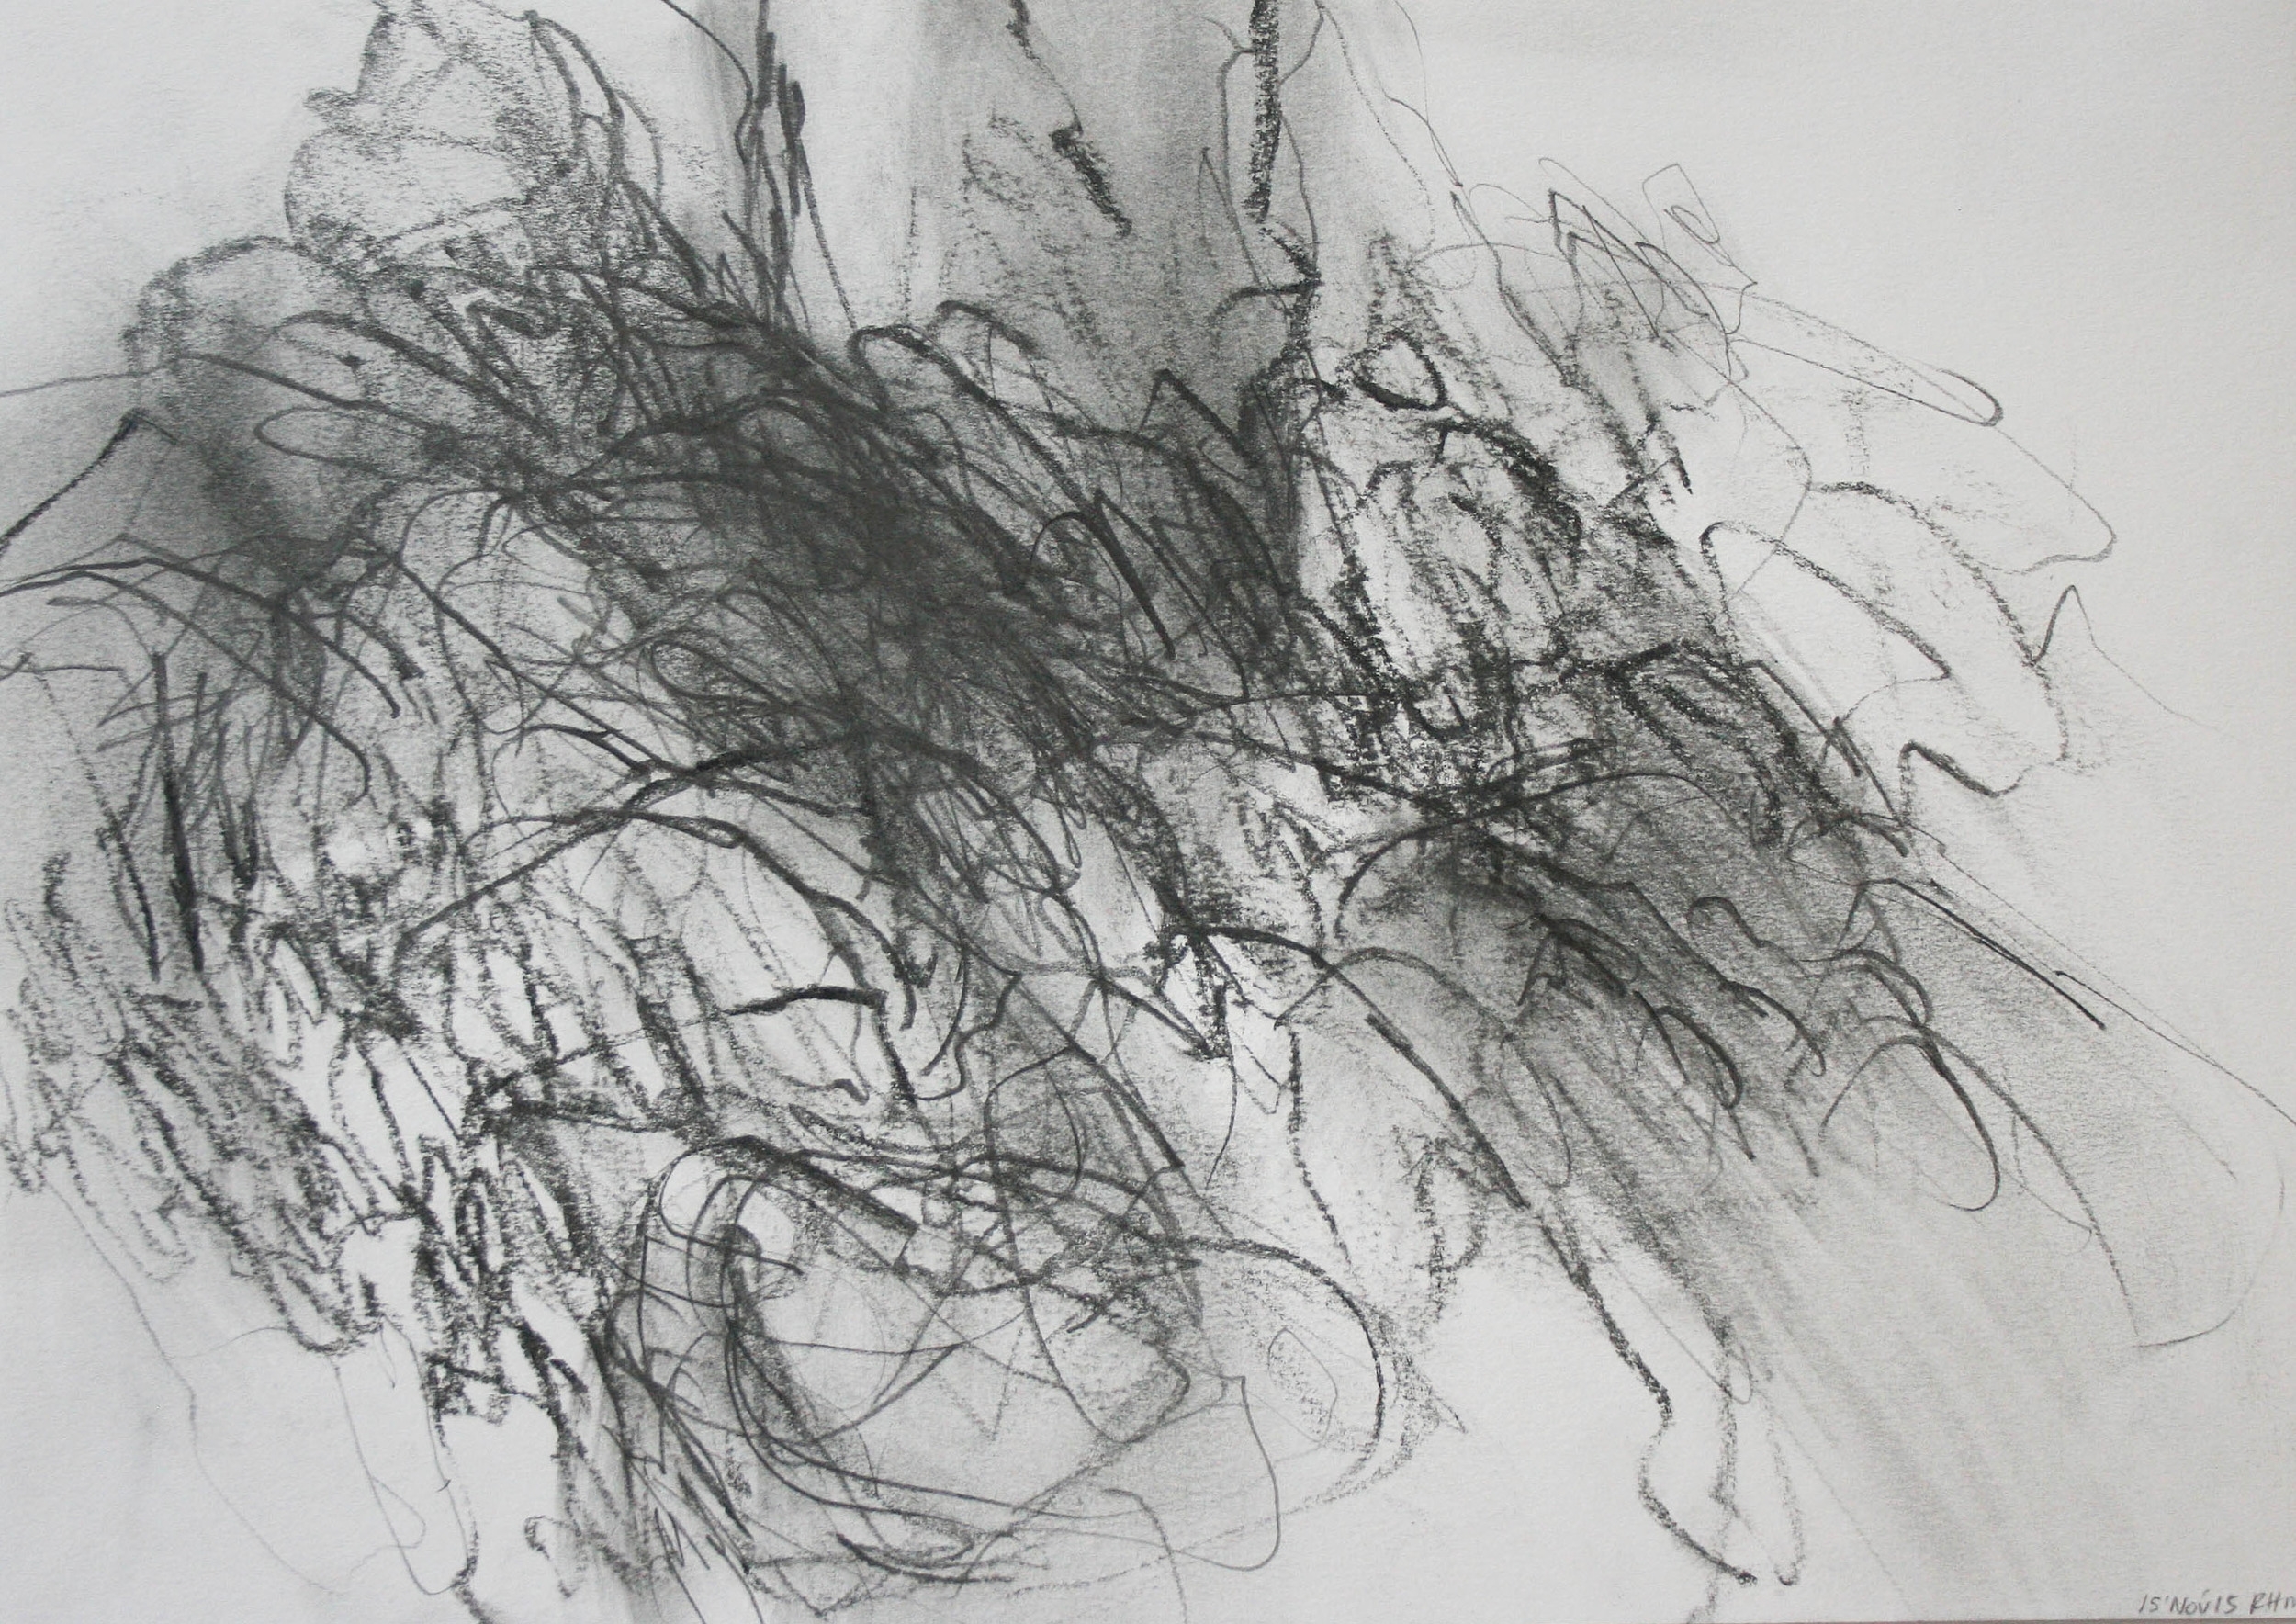  Left hand Drawing VIII  November  2015  graphite on paper  21 x 30 cm 